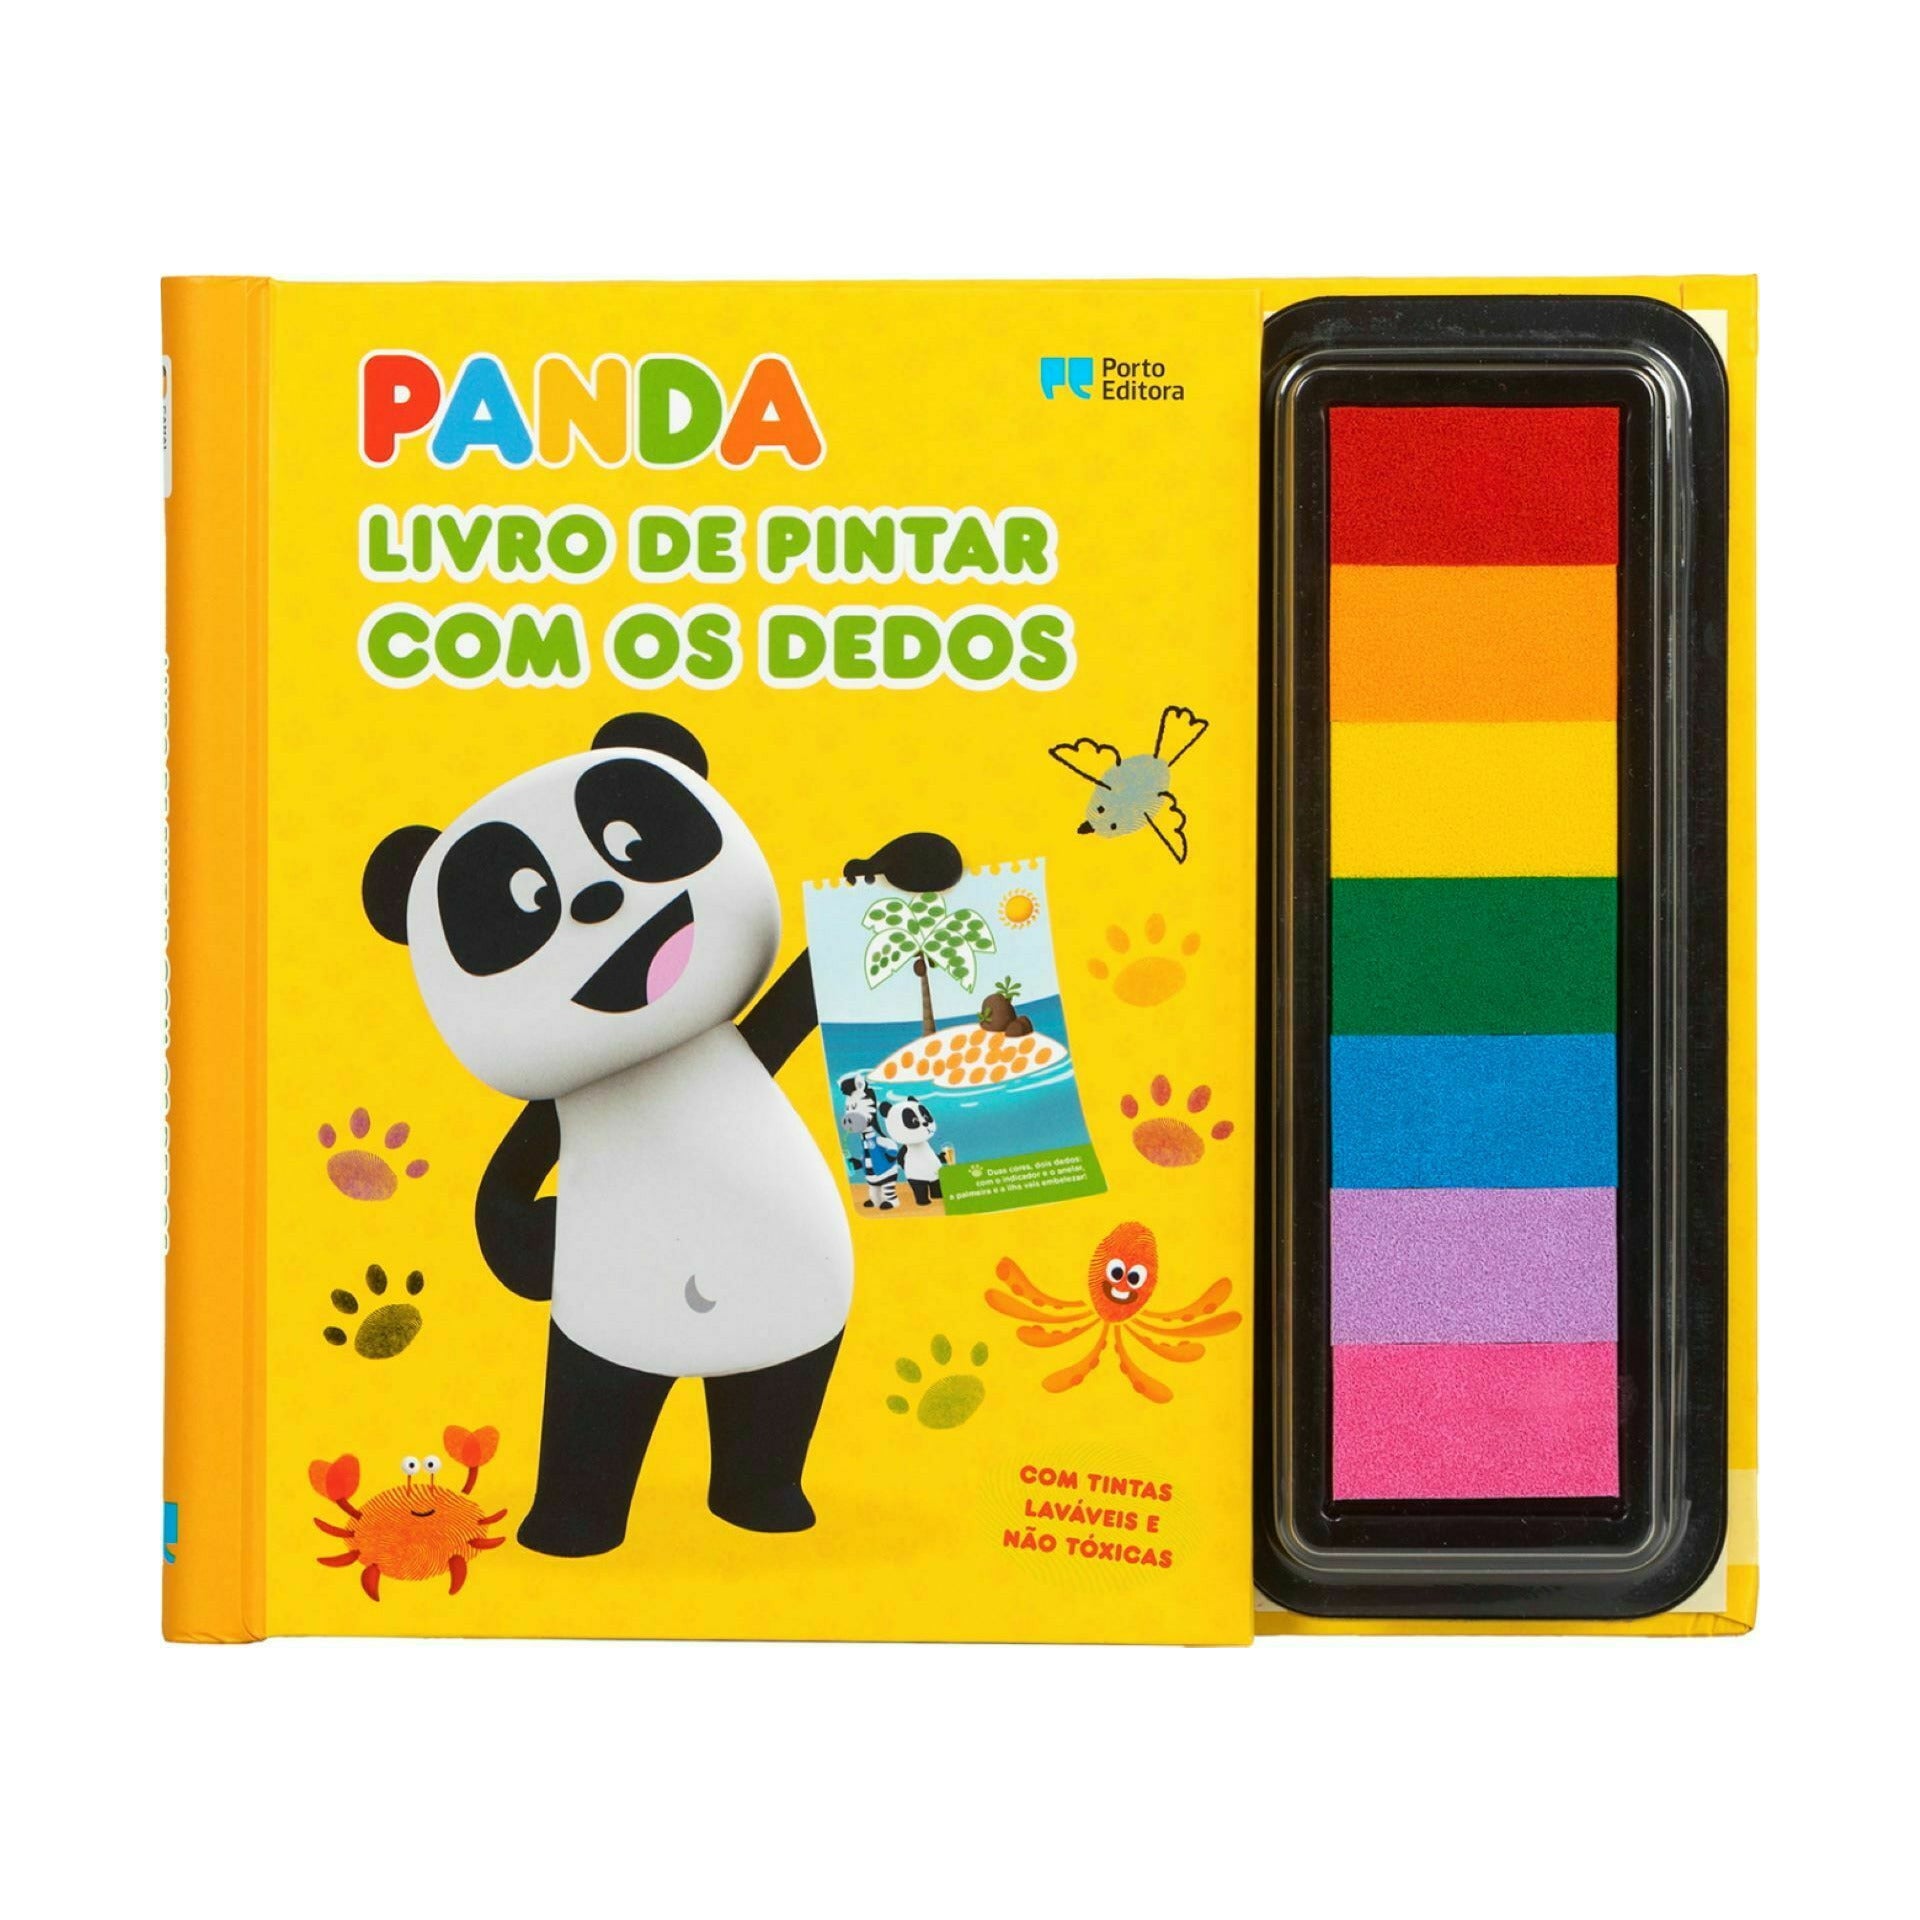 Descubra as páginas para colorir do Panda - divertidas e educativas